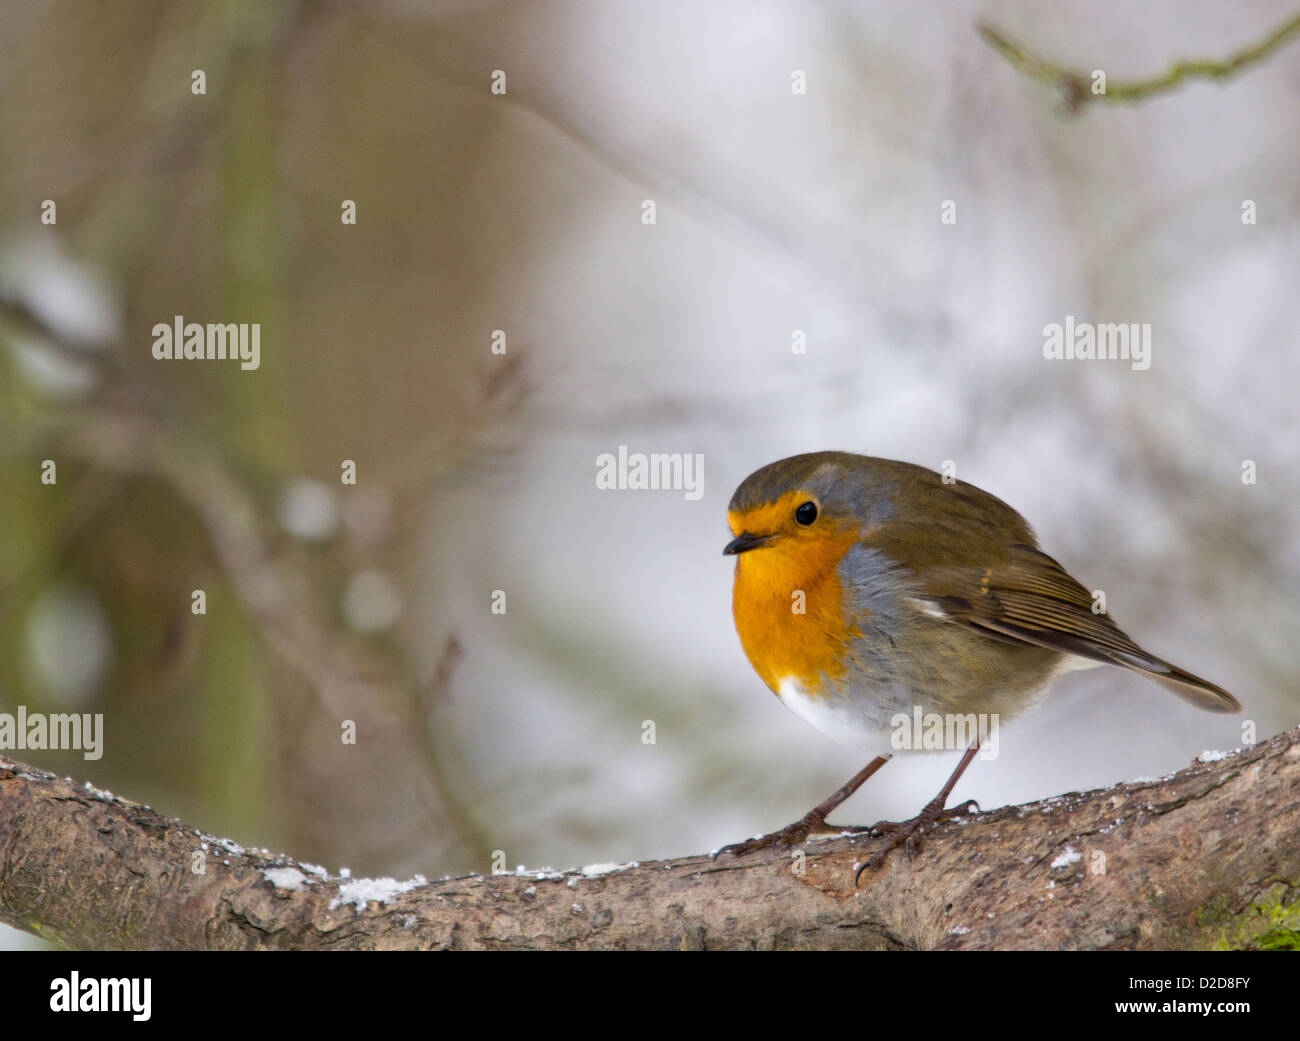 Robin im Schnee Stockfoto